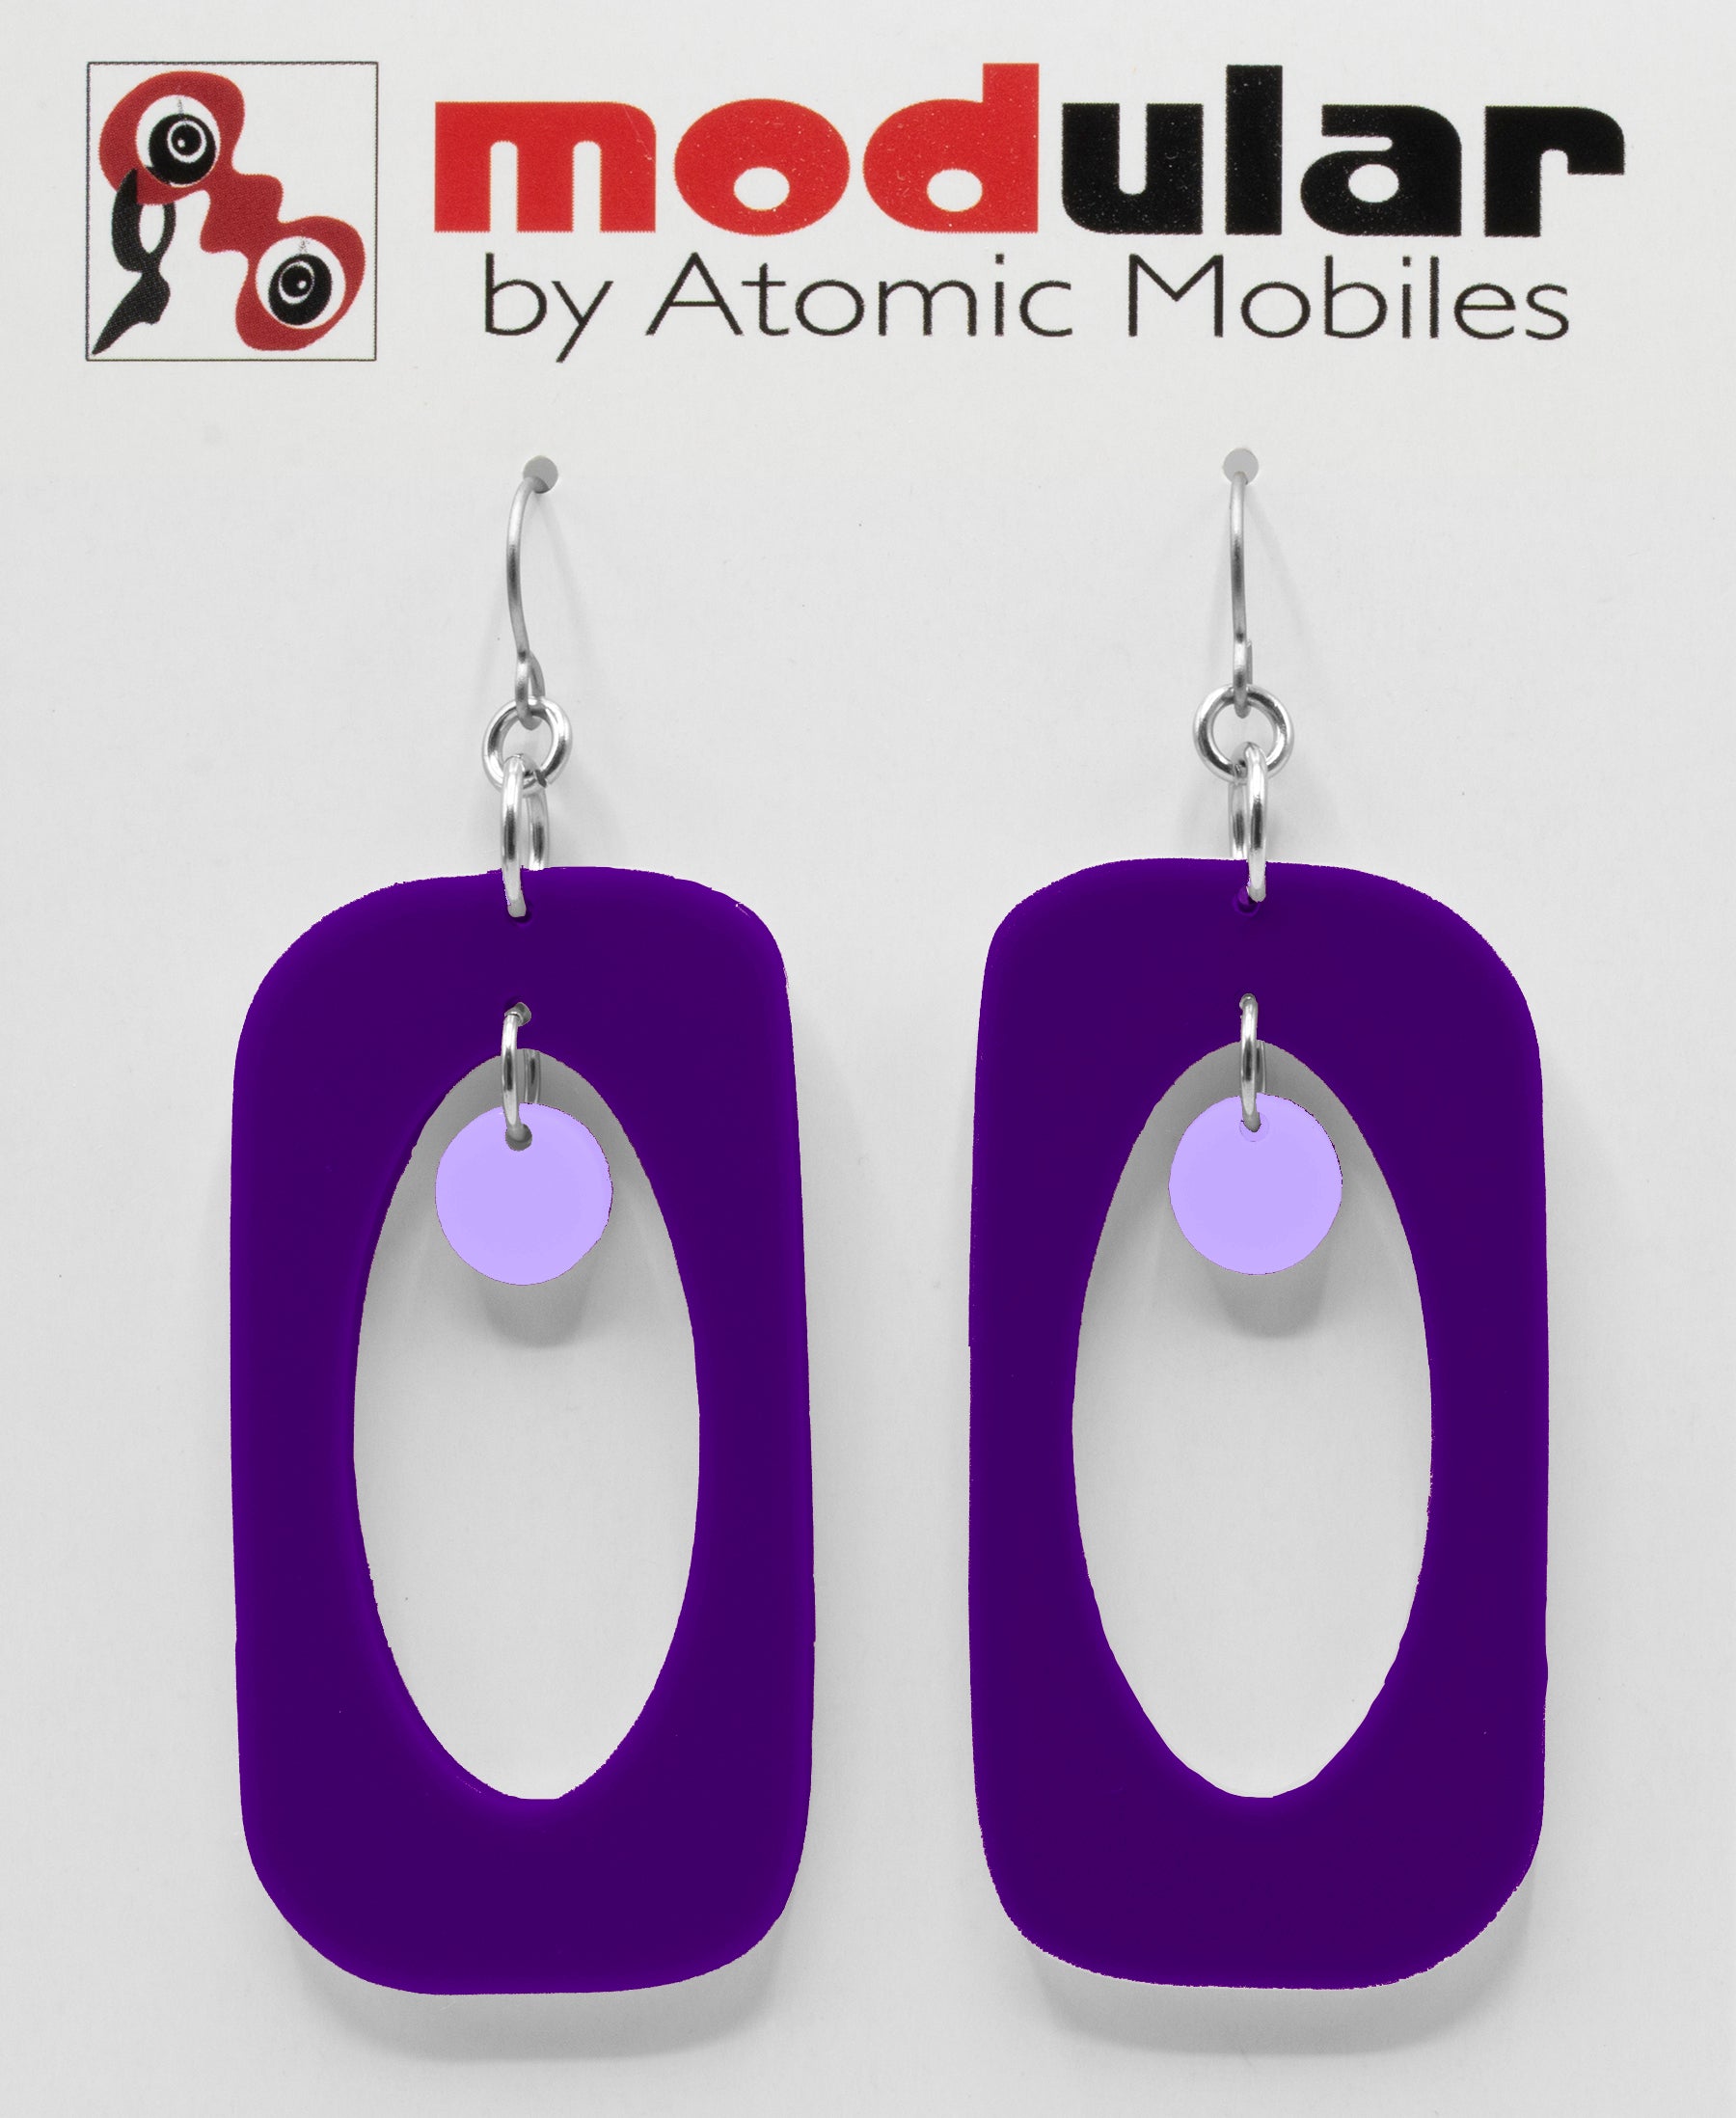 MODular Earrings - Beatnik Boho Statement Earrings in Purple by AtomicMobiles.com - retro era inspired mod handmade jewelry